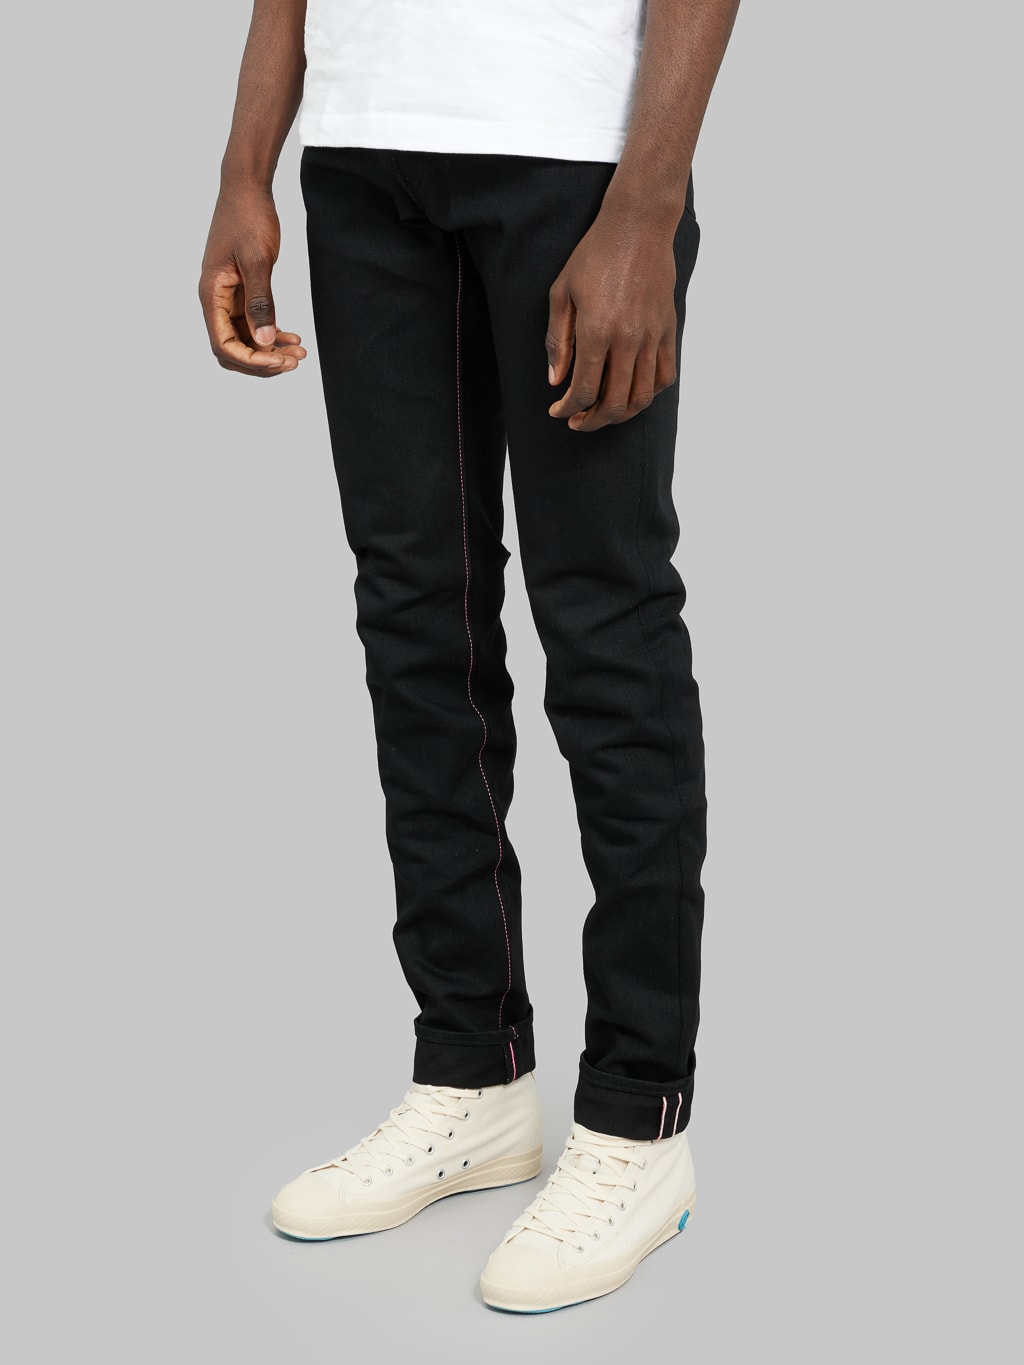 momotaro 0405b selvedge black denim high tapered jeans side fit